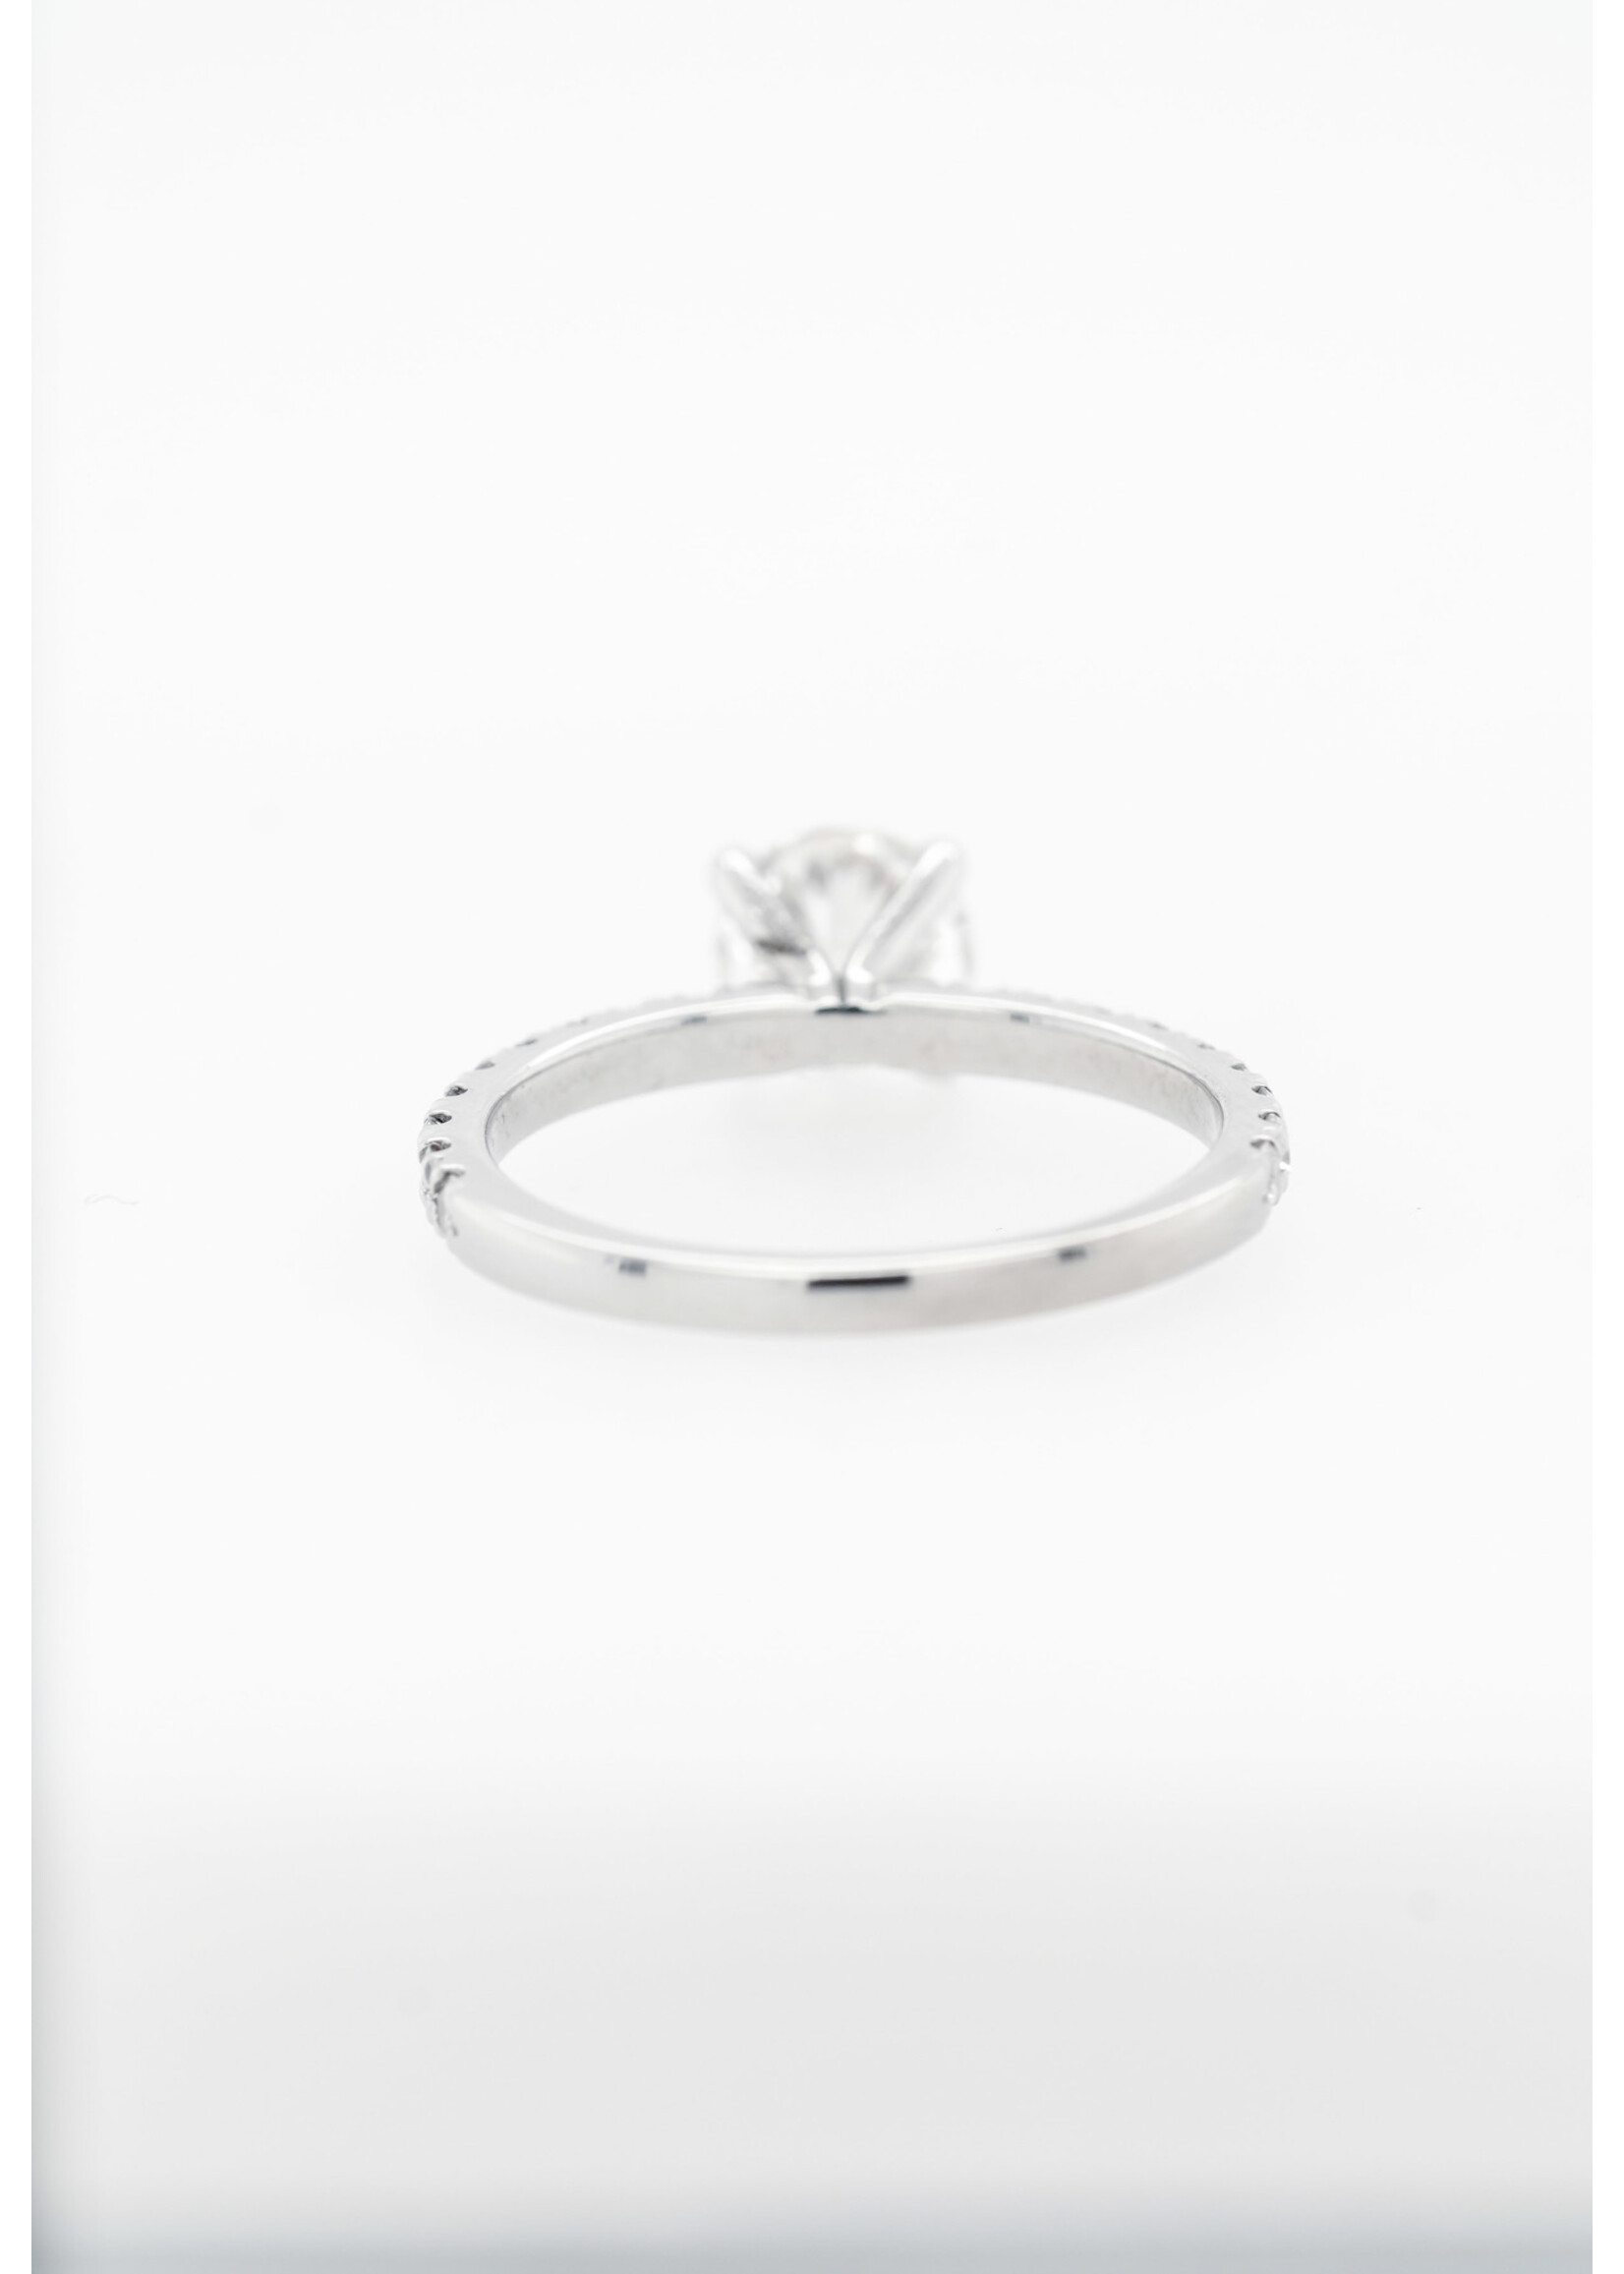 14KW 2.42g 1.34ctw (1.00ctr) G/VS2 Round Diamond Engagement Ring (Size 7)